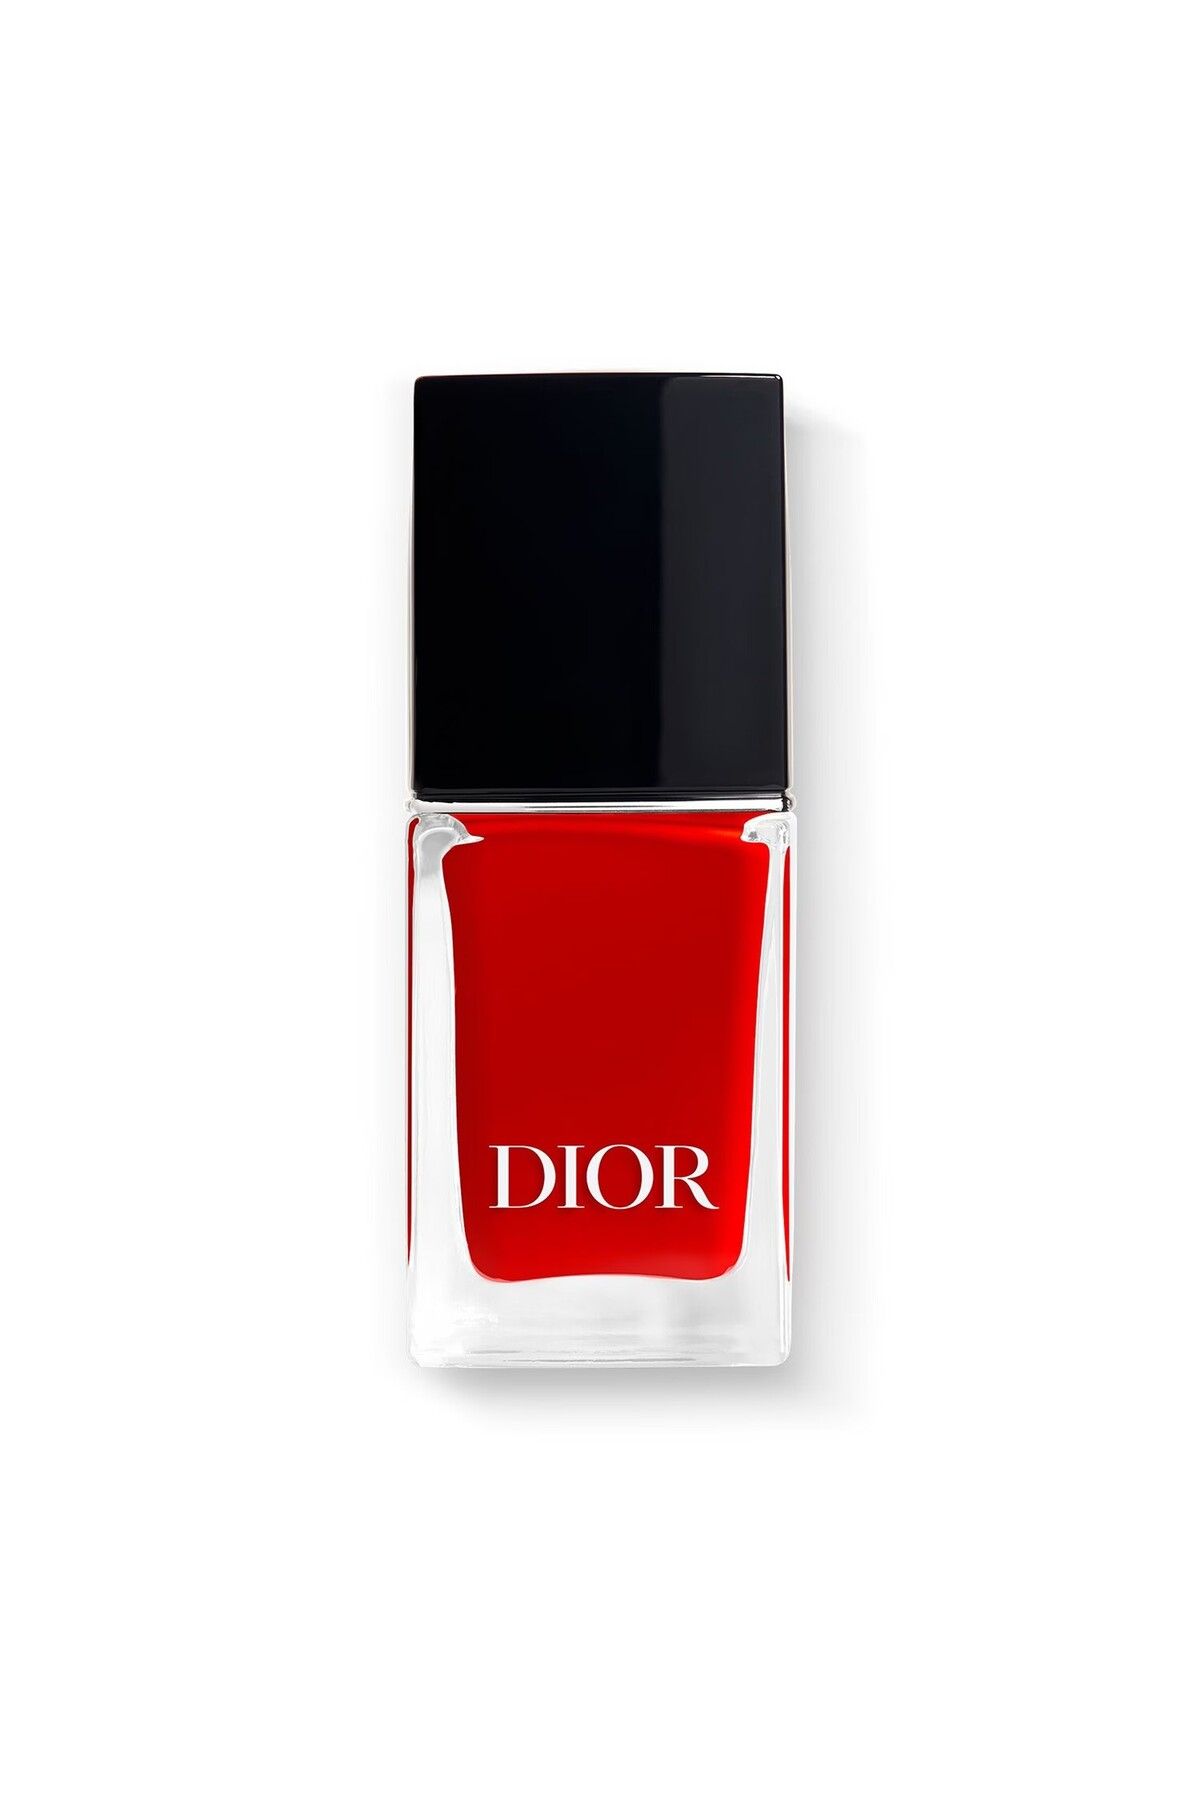 Dior Vernis - Parlak Kaplamalı Ve Jel Efektli Oje 10 ml